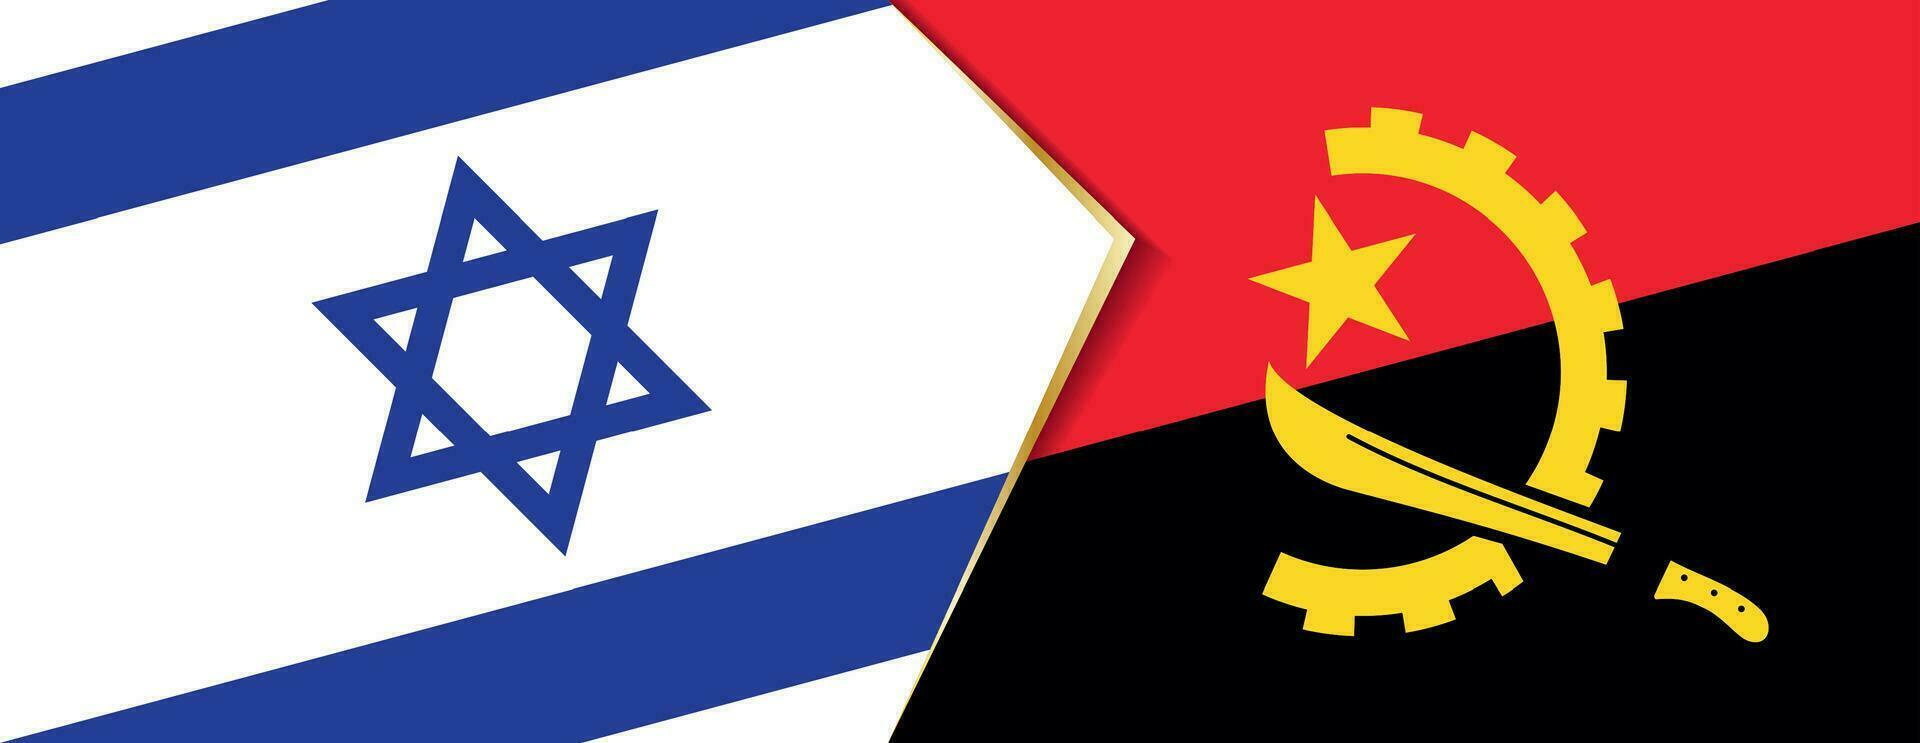 Israel und Angola Flaggen, zwei Vektor Flaggen.